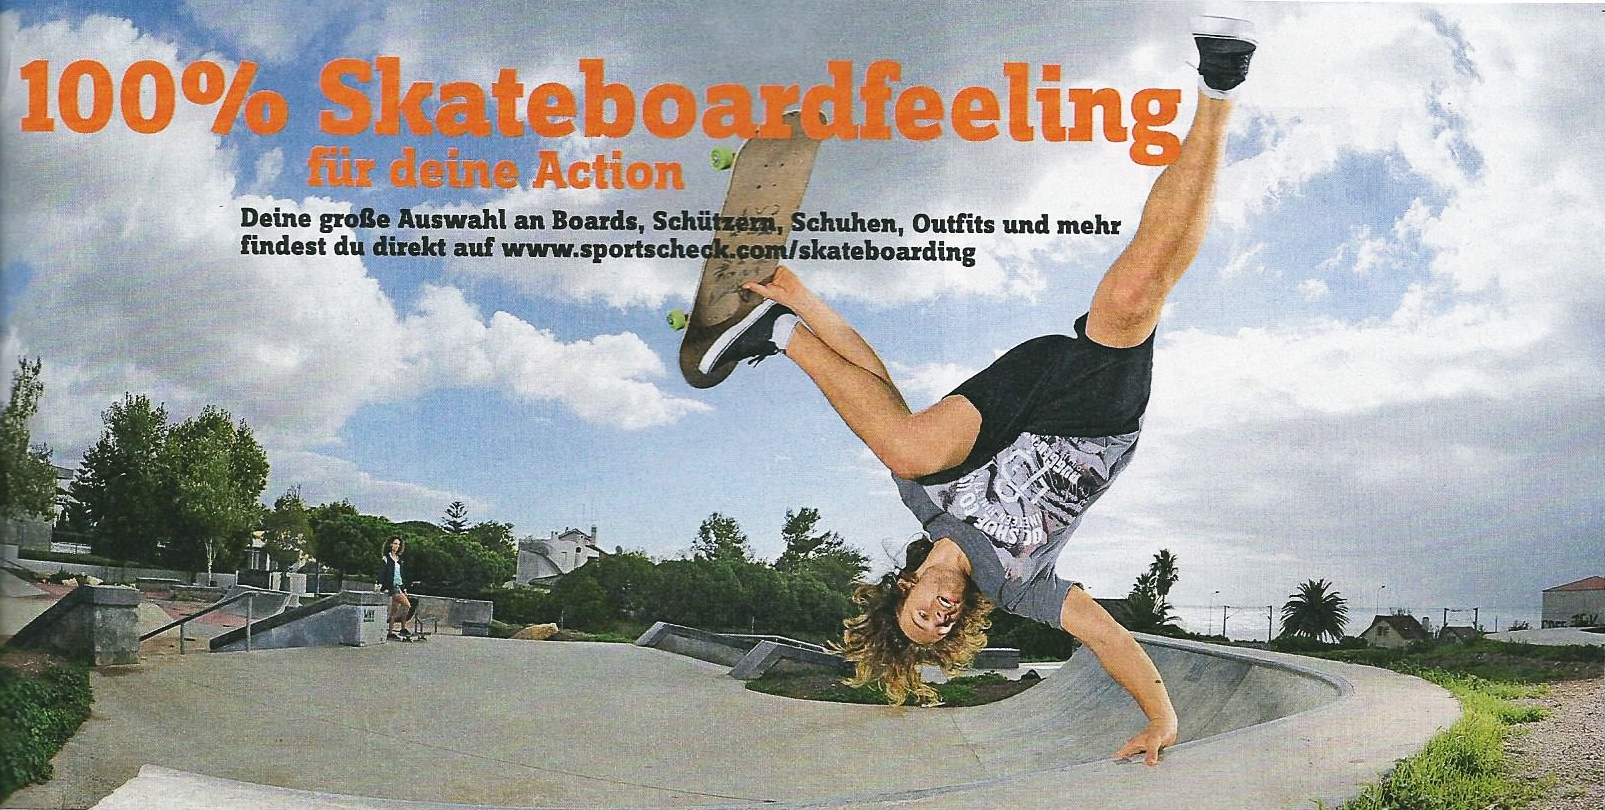 Skaterboarder profesional Munich Tom Cat.jpg